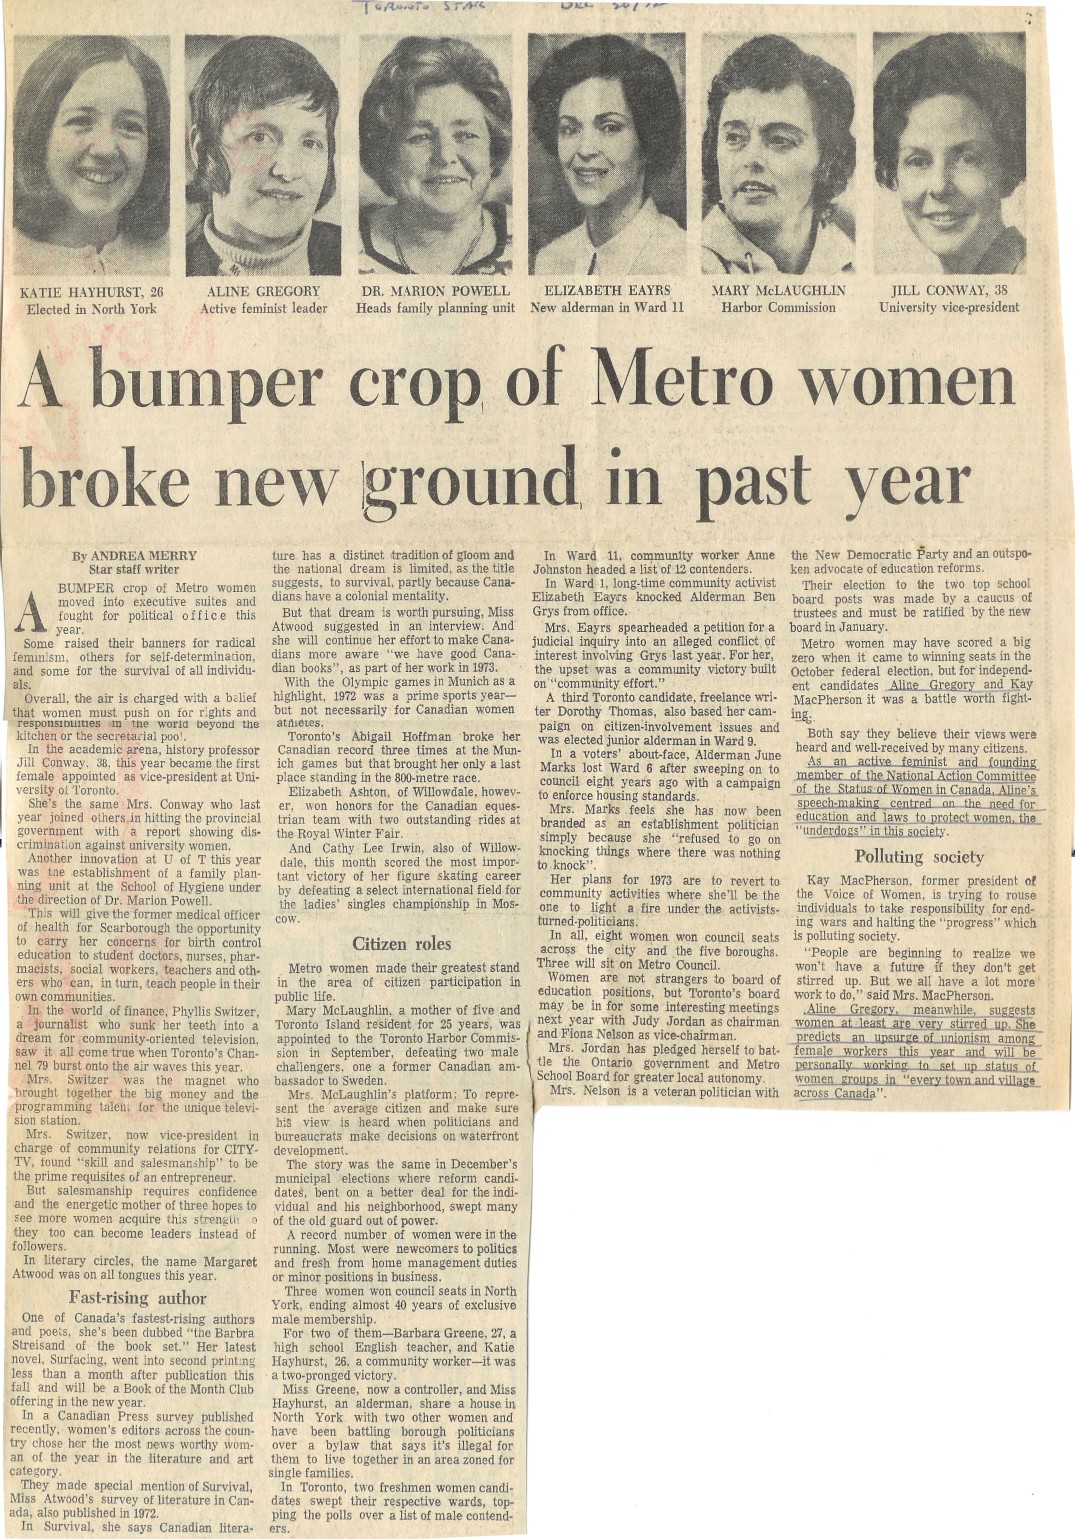 A bumper crop of Metro women broke new ground in past year - Toronto Star, Dec 1972